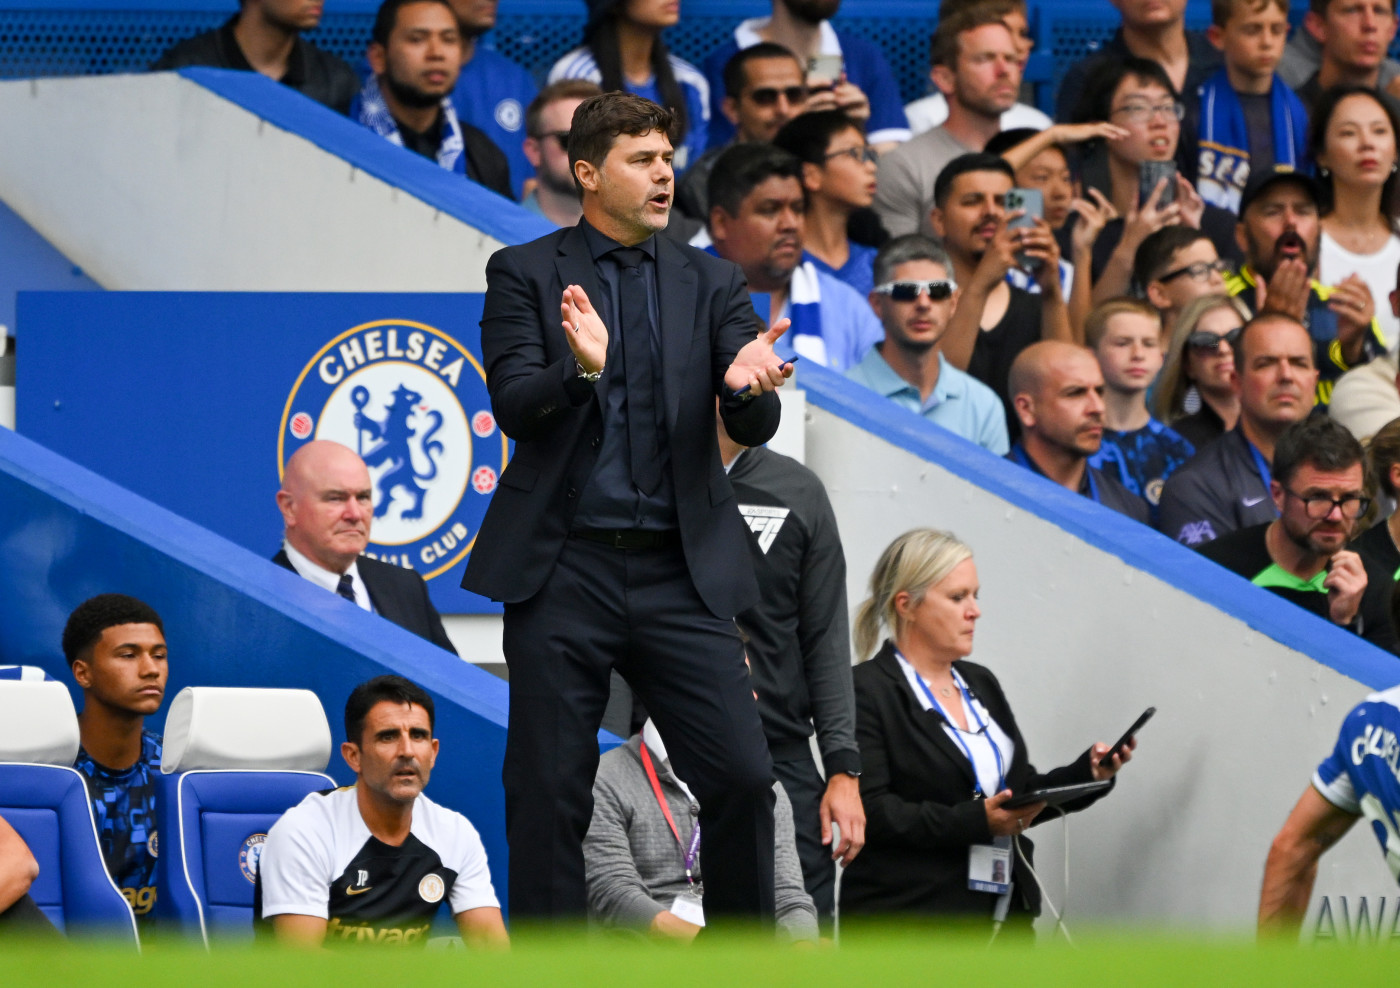 Pochettino looking to build winning momentum at Stamford Bridge for Chelsea  - We Ain't Got No History